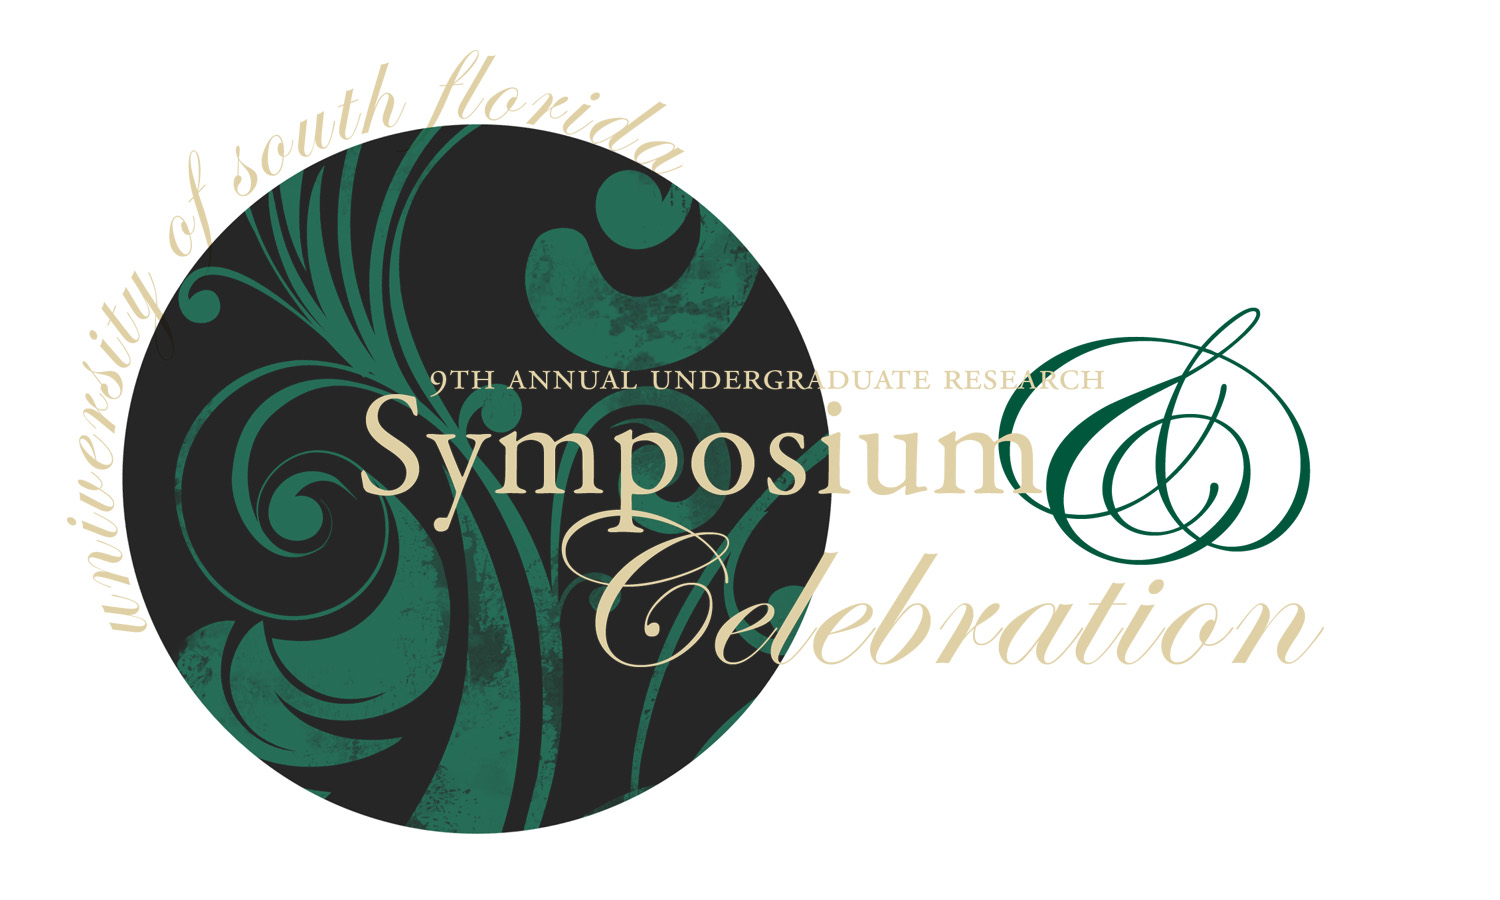 9th Annual Undergraduate Research Symposium and Celebration